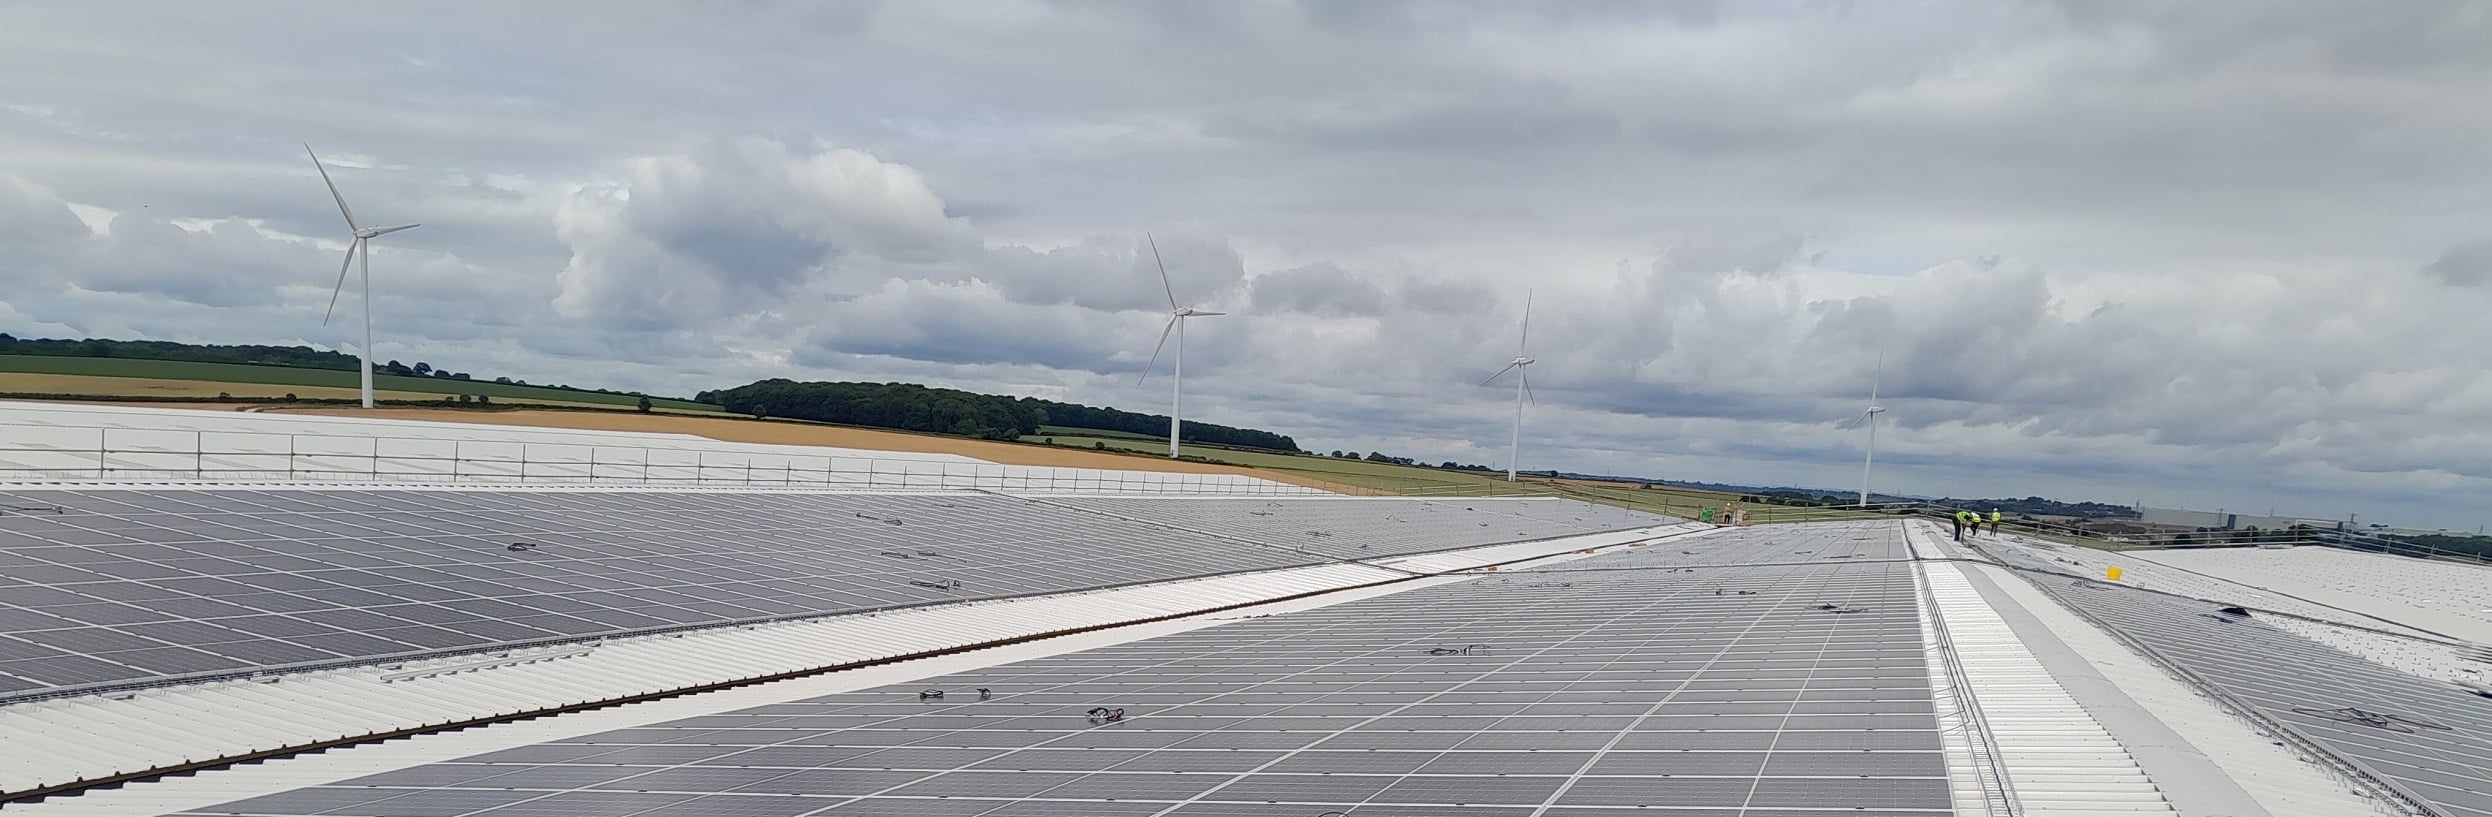 https://www.mawdsleys.co.uk/news/solar-panels-installed-on-new-doncaster-3pl-facility/ thumbnail image